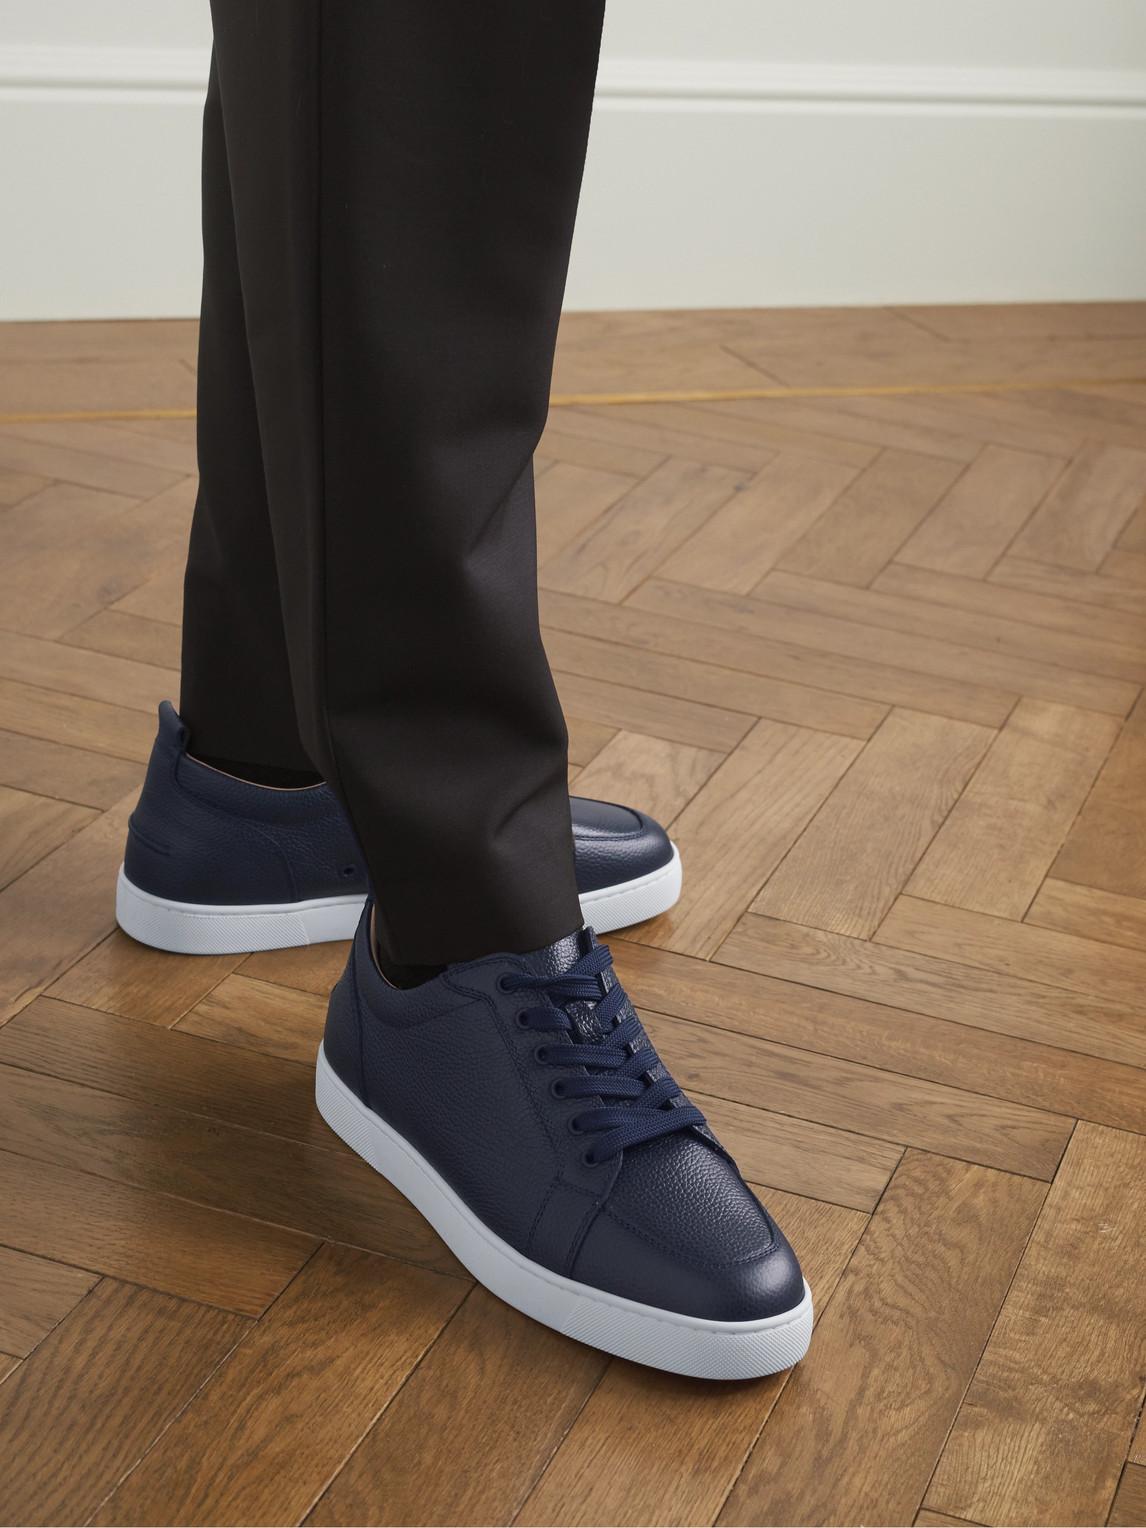 Christian Louboutin Rantulow Full-grain Leather Sneakers in Blue for Men